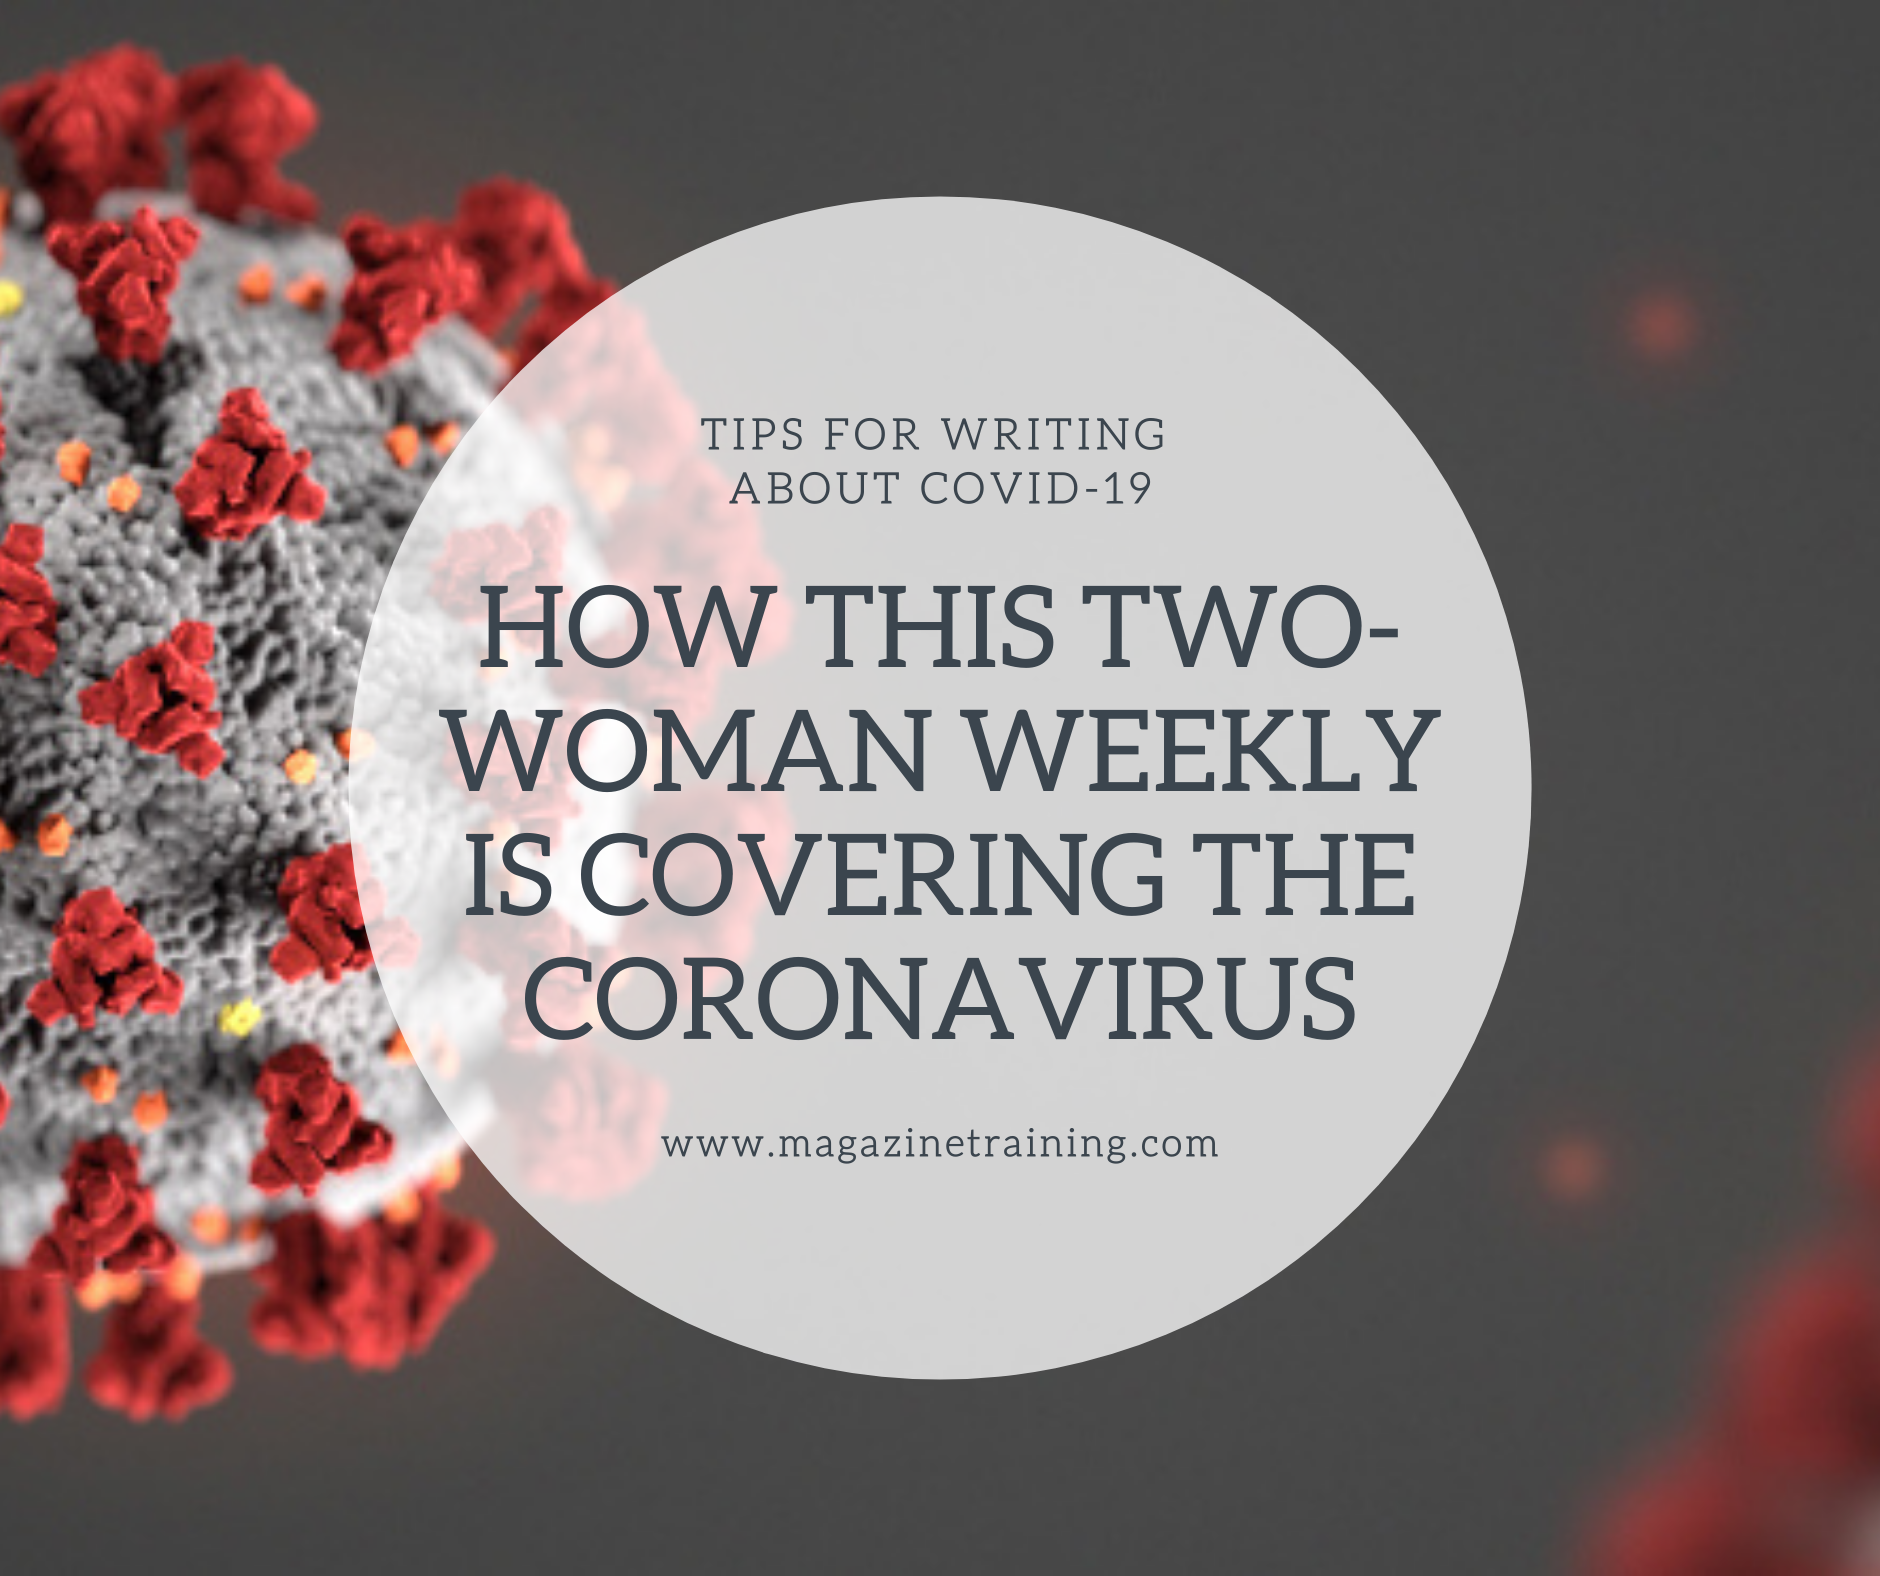 weekly is covering the coronavirus